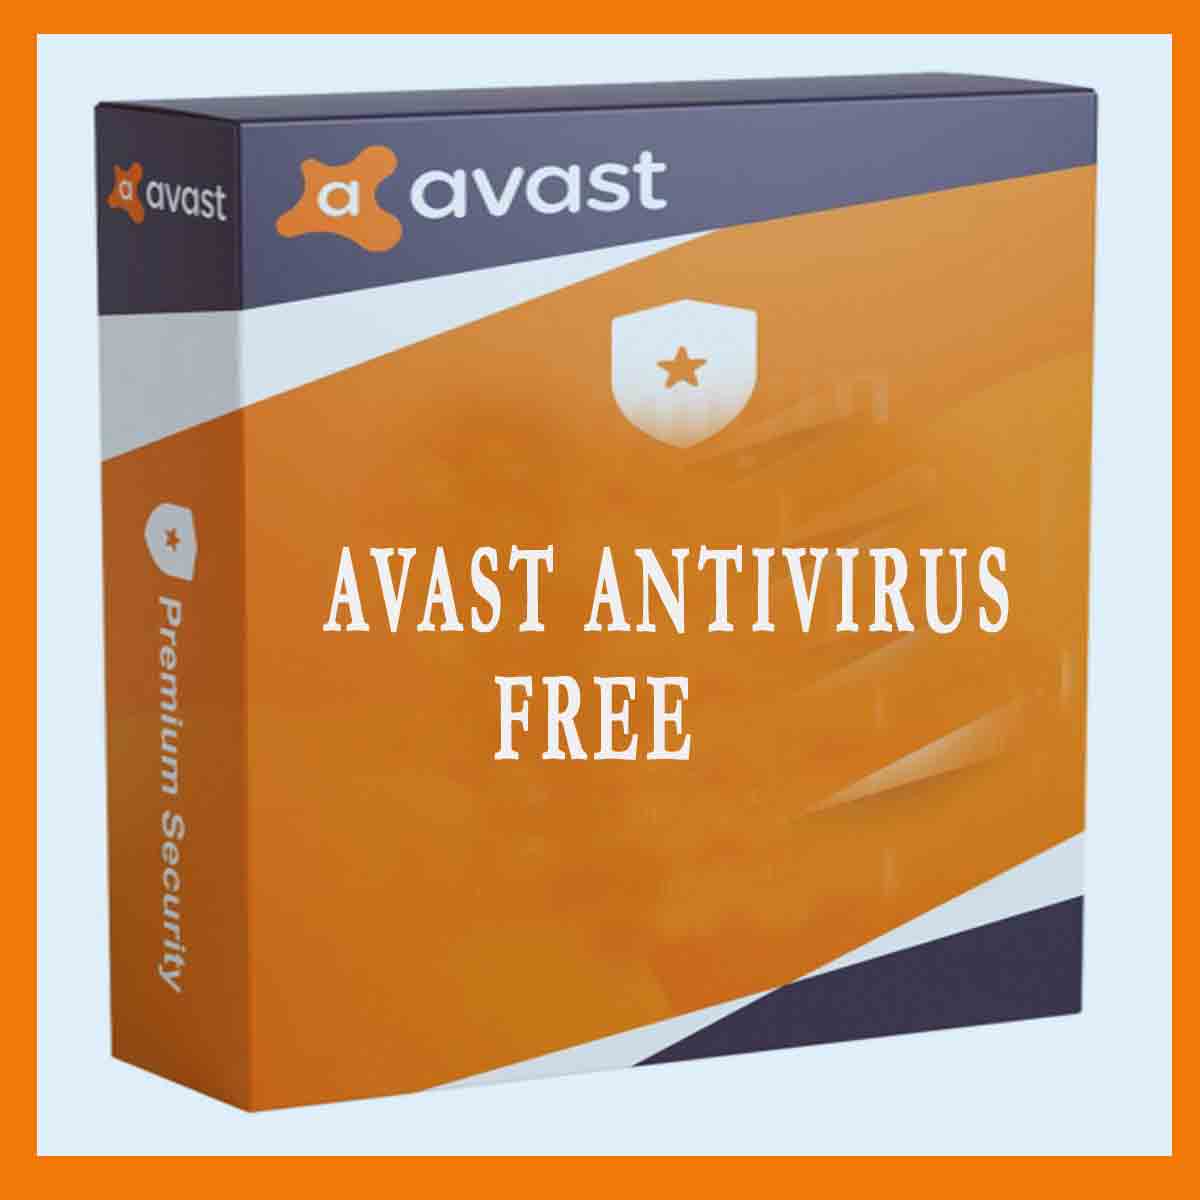 Buy Avast Free Antivirus License Key - 0800-090-3222 - Avast Serial Key